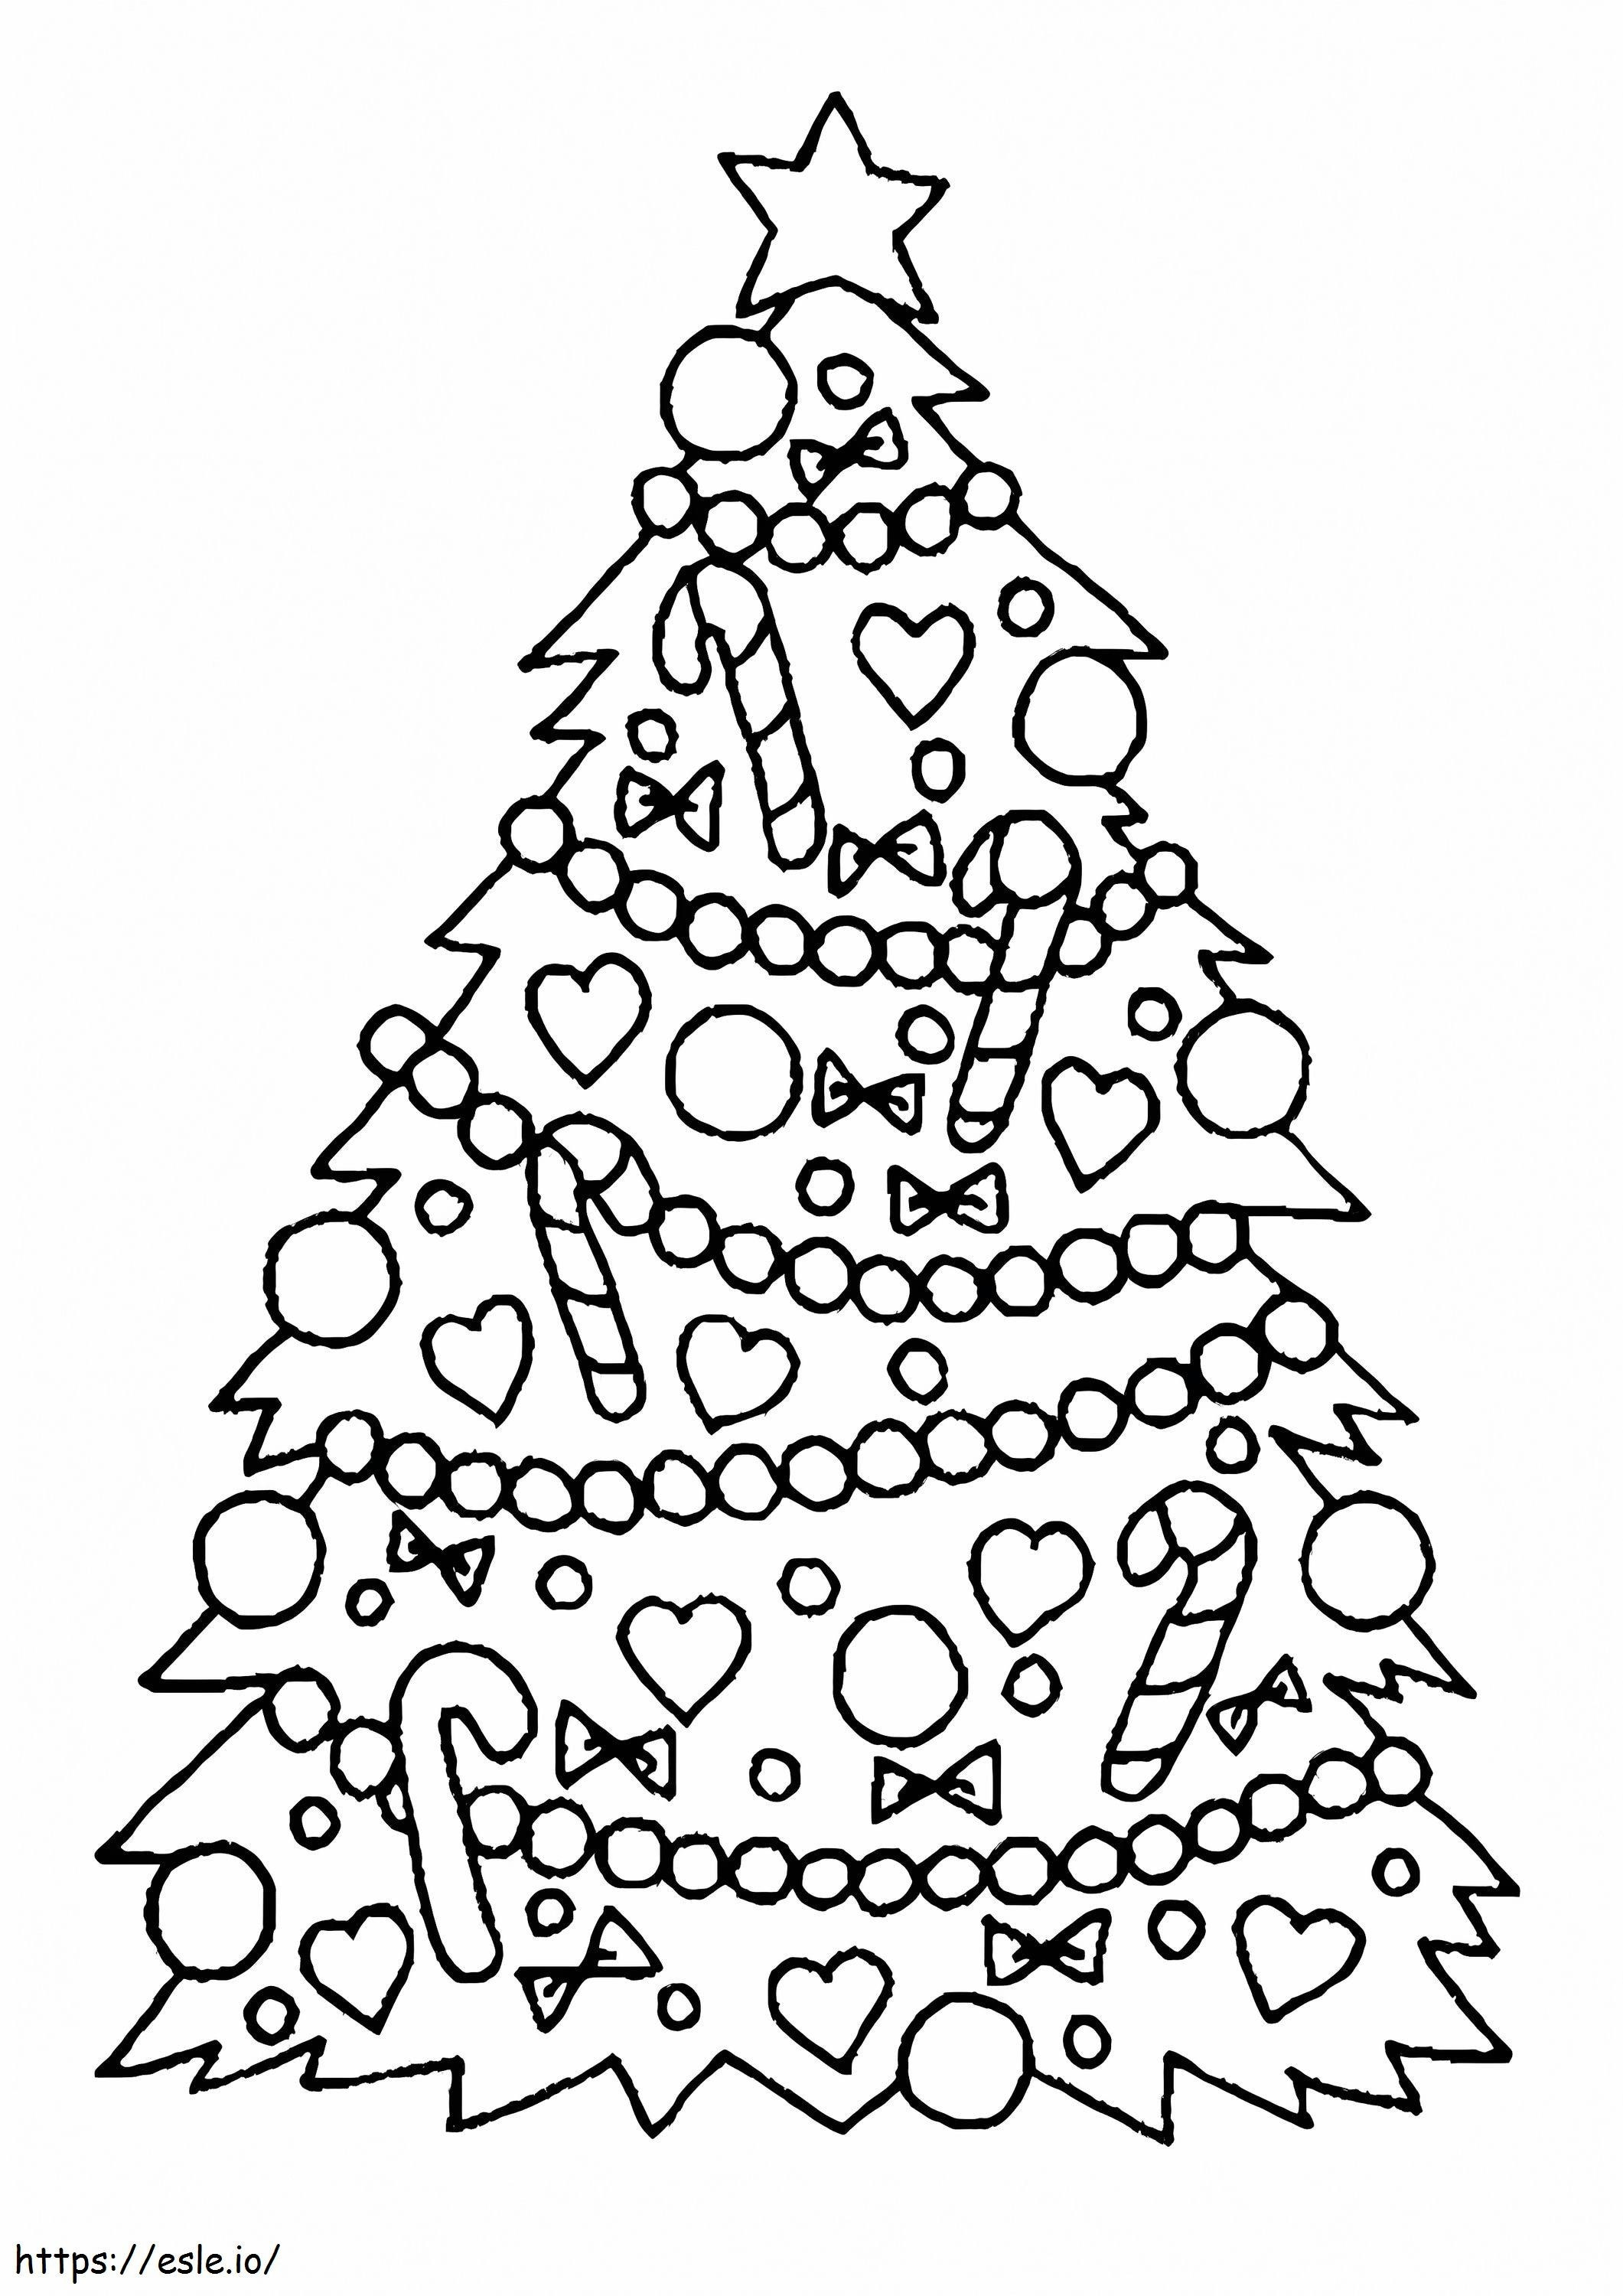 Basic Christmas Tree coloring page